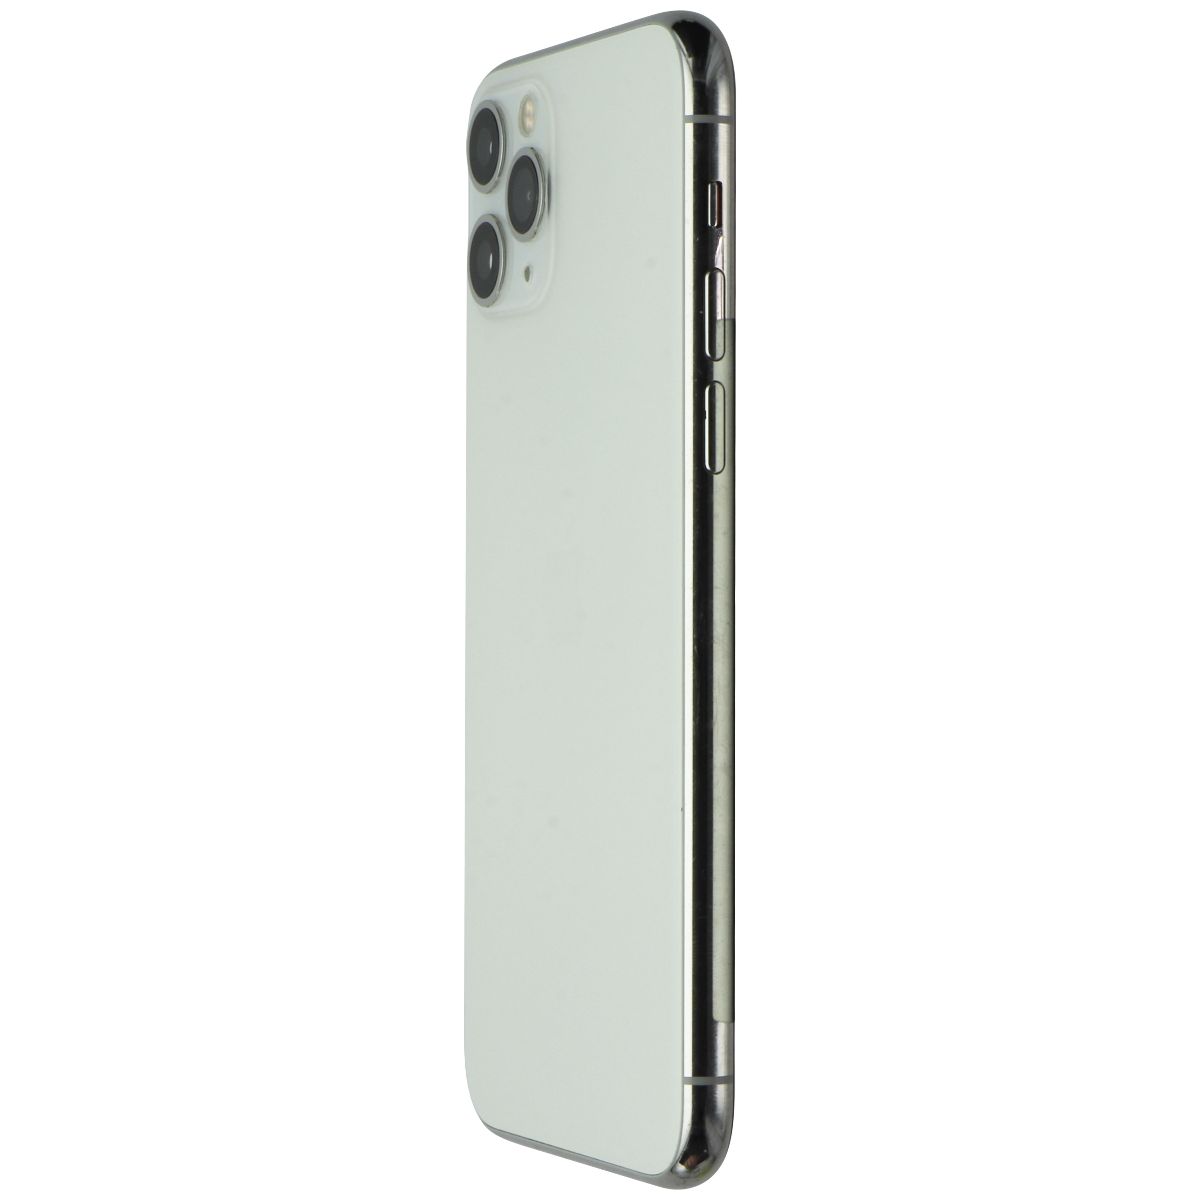 Apple iPhone 11 Pro (5.8-inch) Smartphone A2160 (Unlocked) - 64GB / Silver Cell Phones & Smartphones Apple    - Simple Cell Bulk Wholesale Pricing - USA Seller